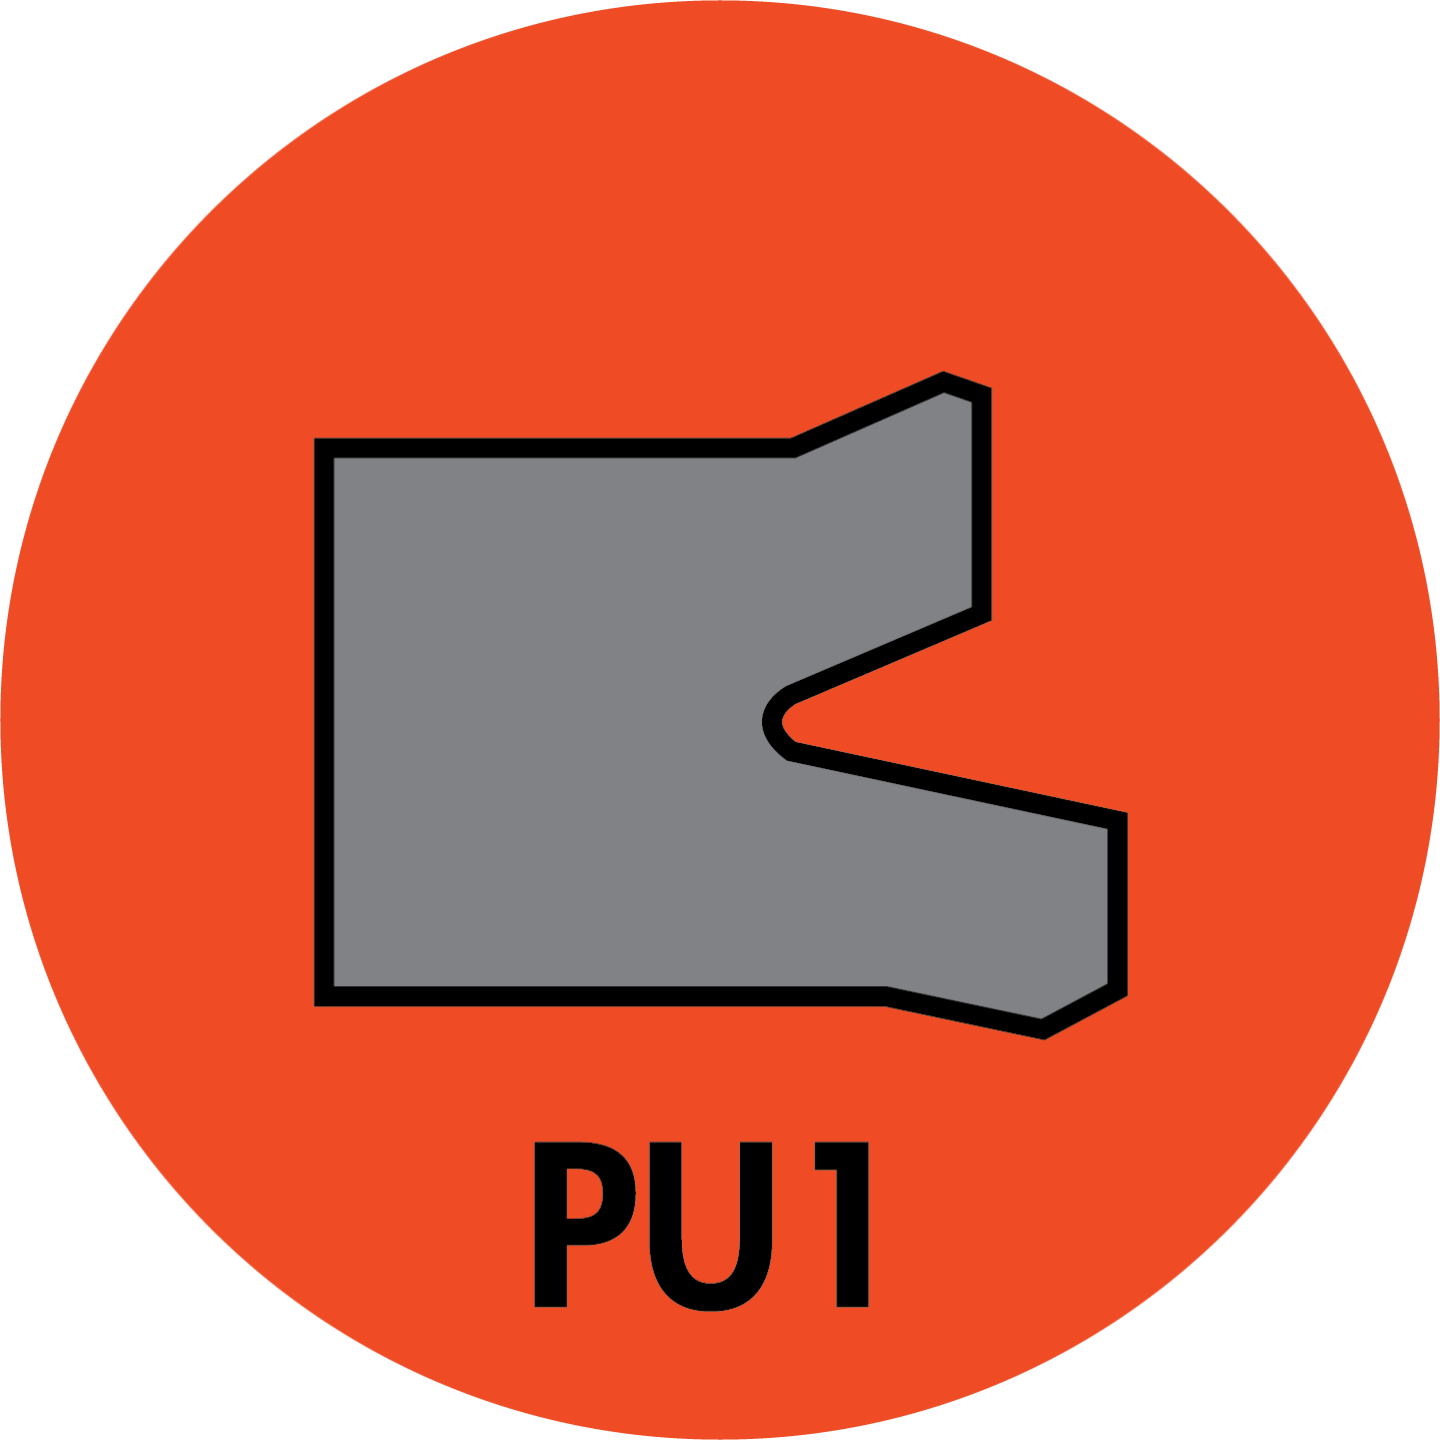 PU1 PISTON U-CUP (AU/P92E) - PU1-37504000-625-P92E Image 1